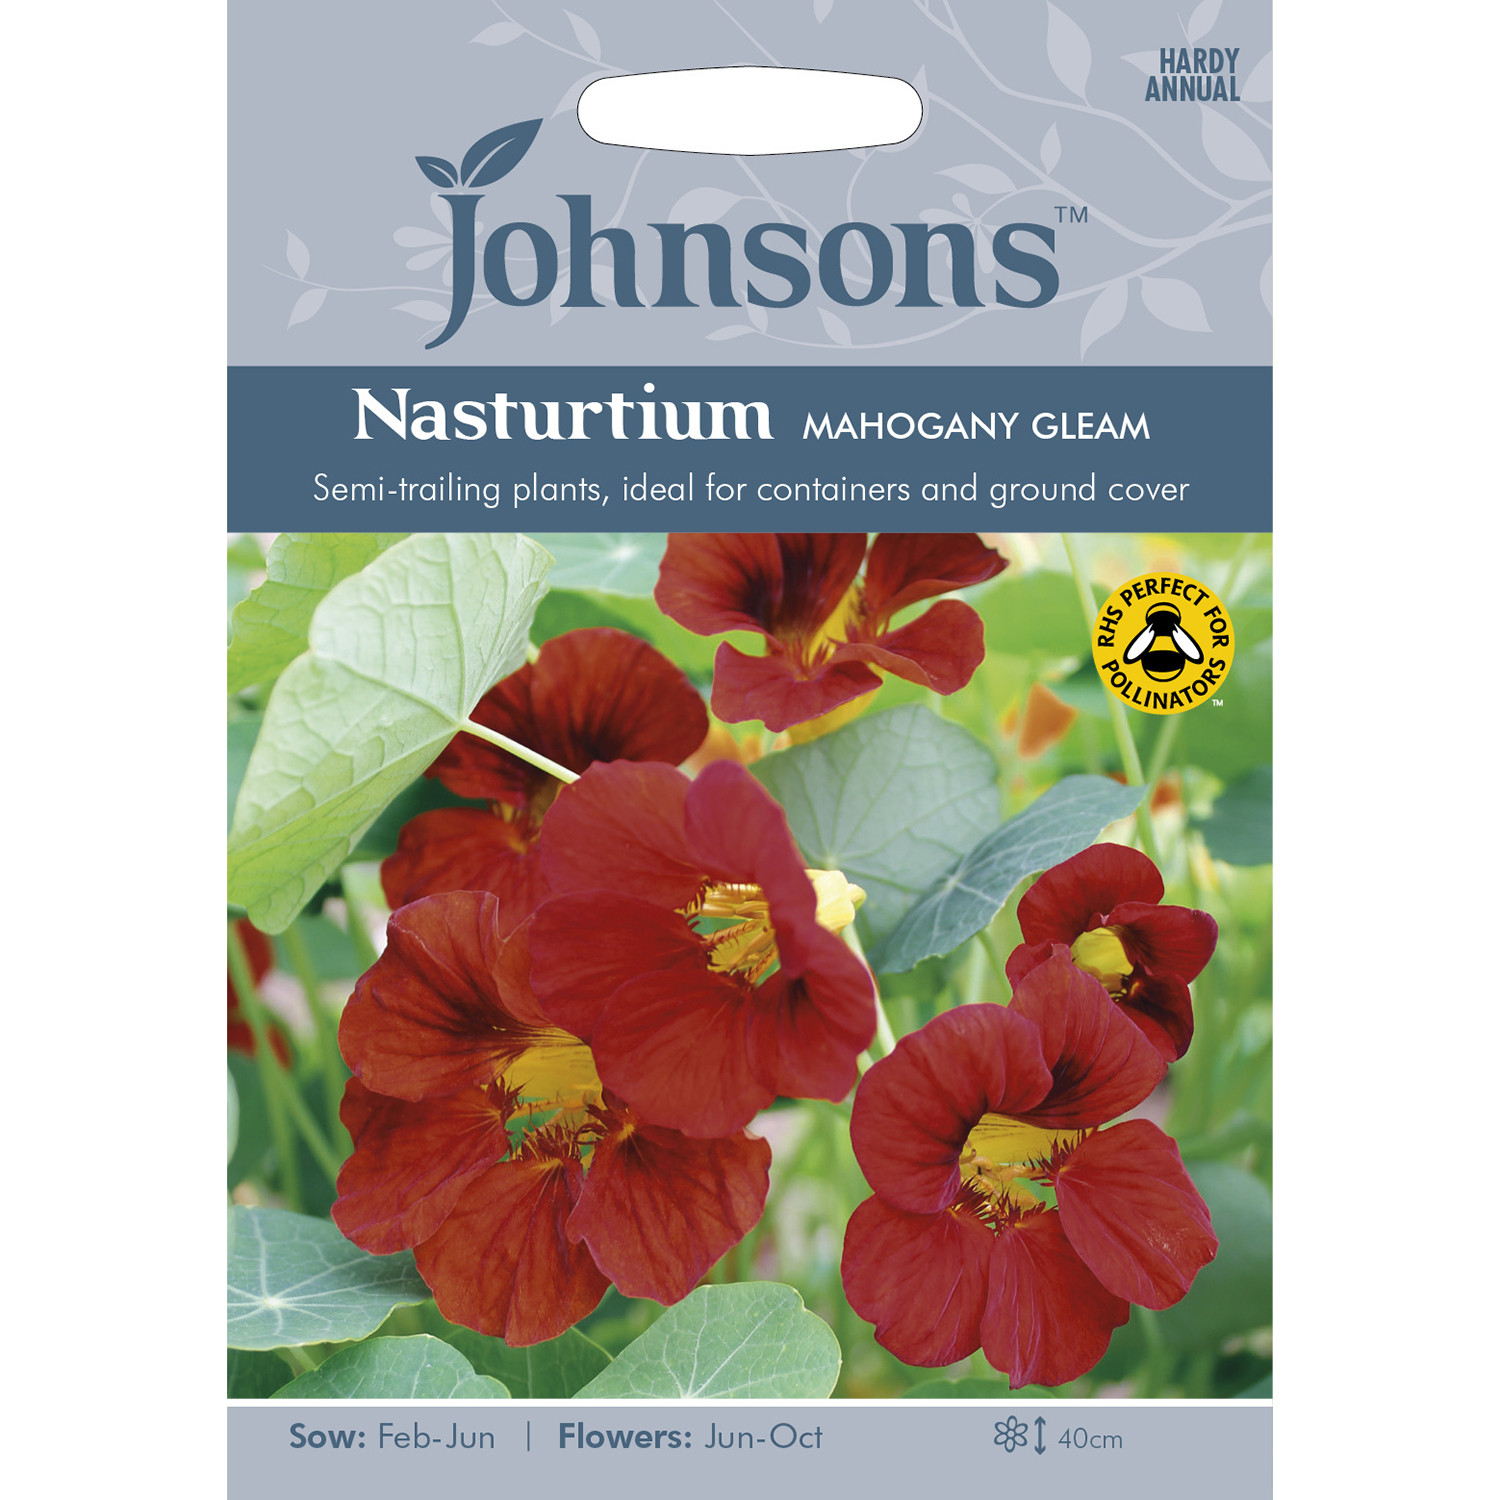 Johnsons Nasturtium Mahogany Gleam Flower Seeds Image 2